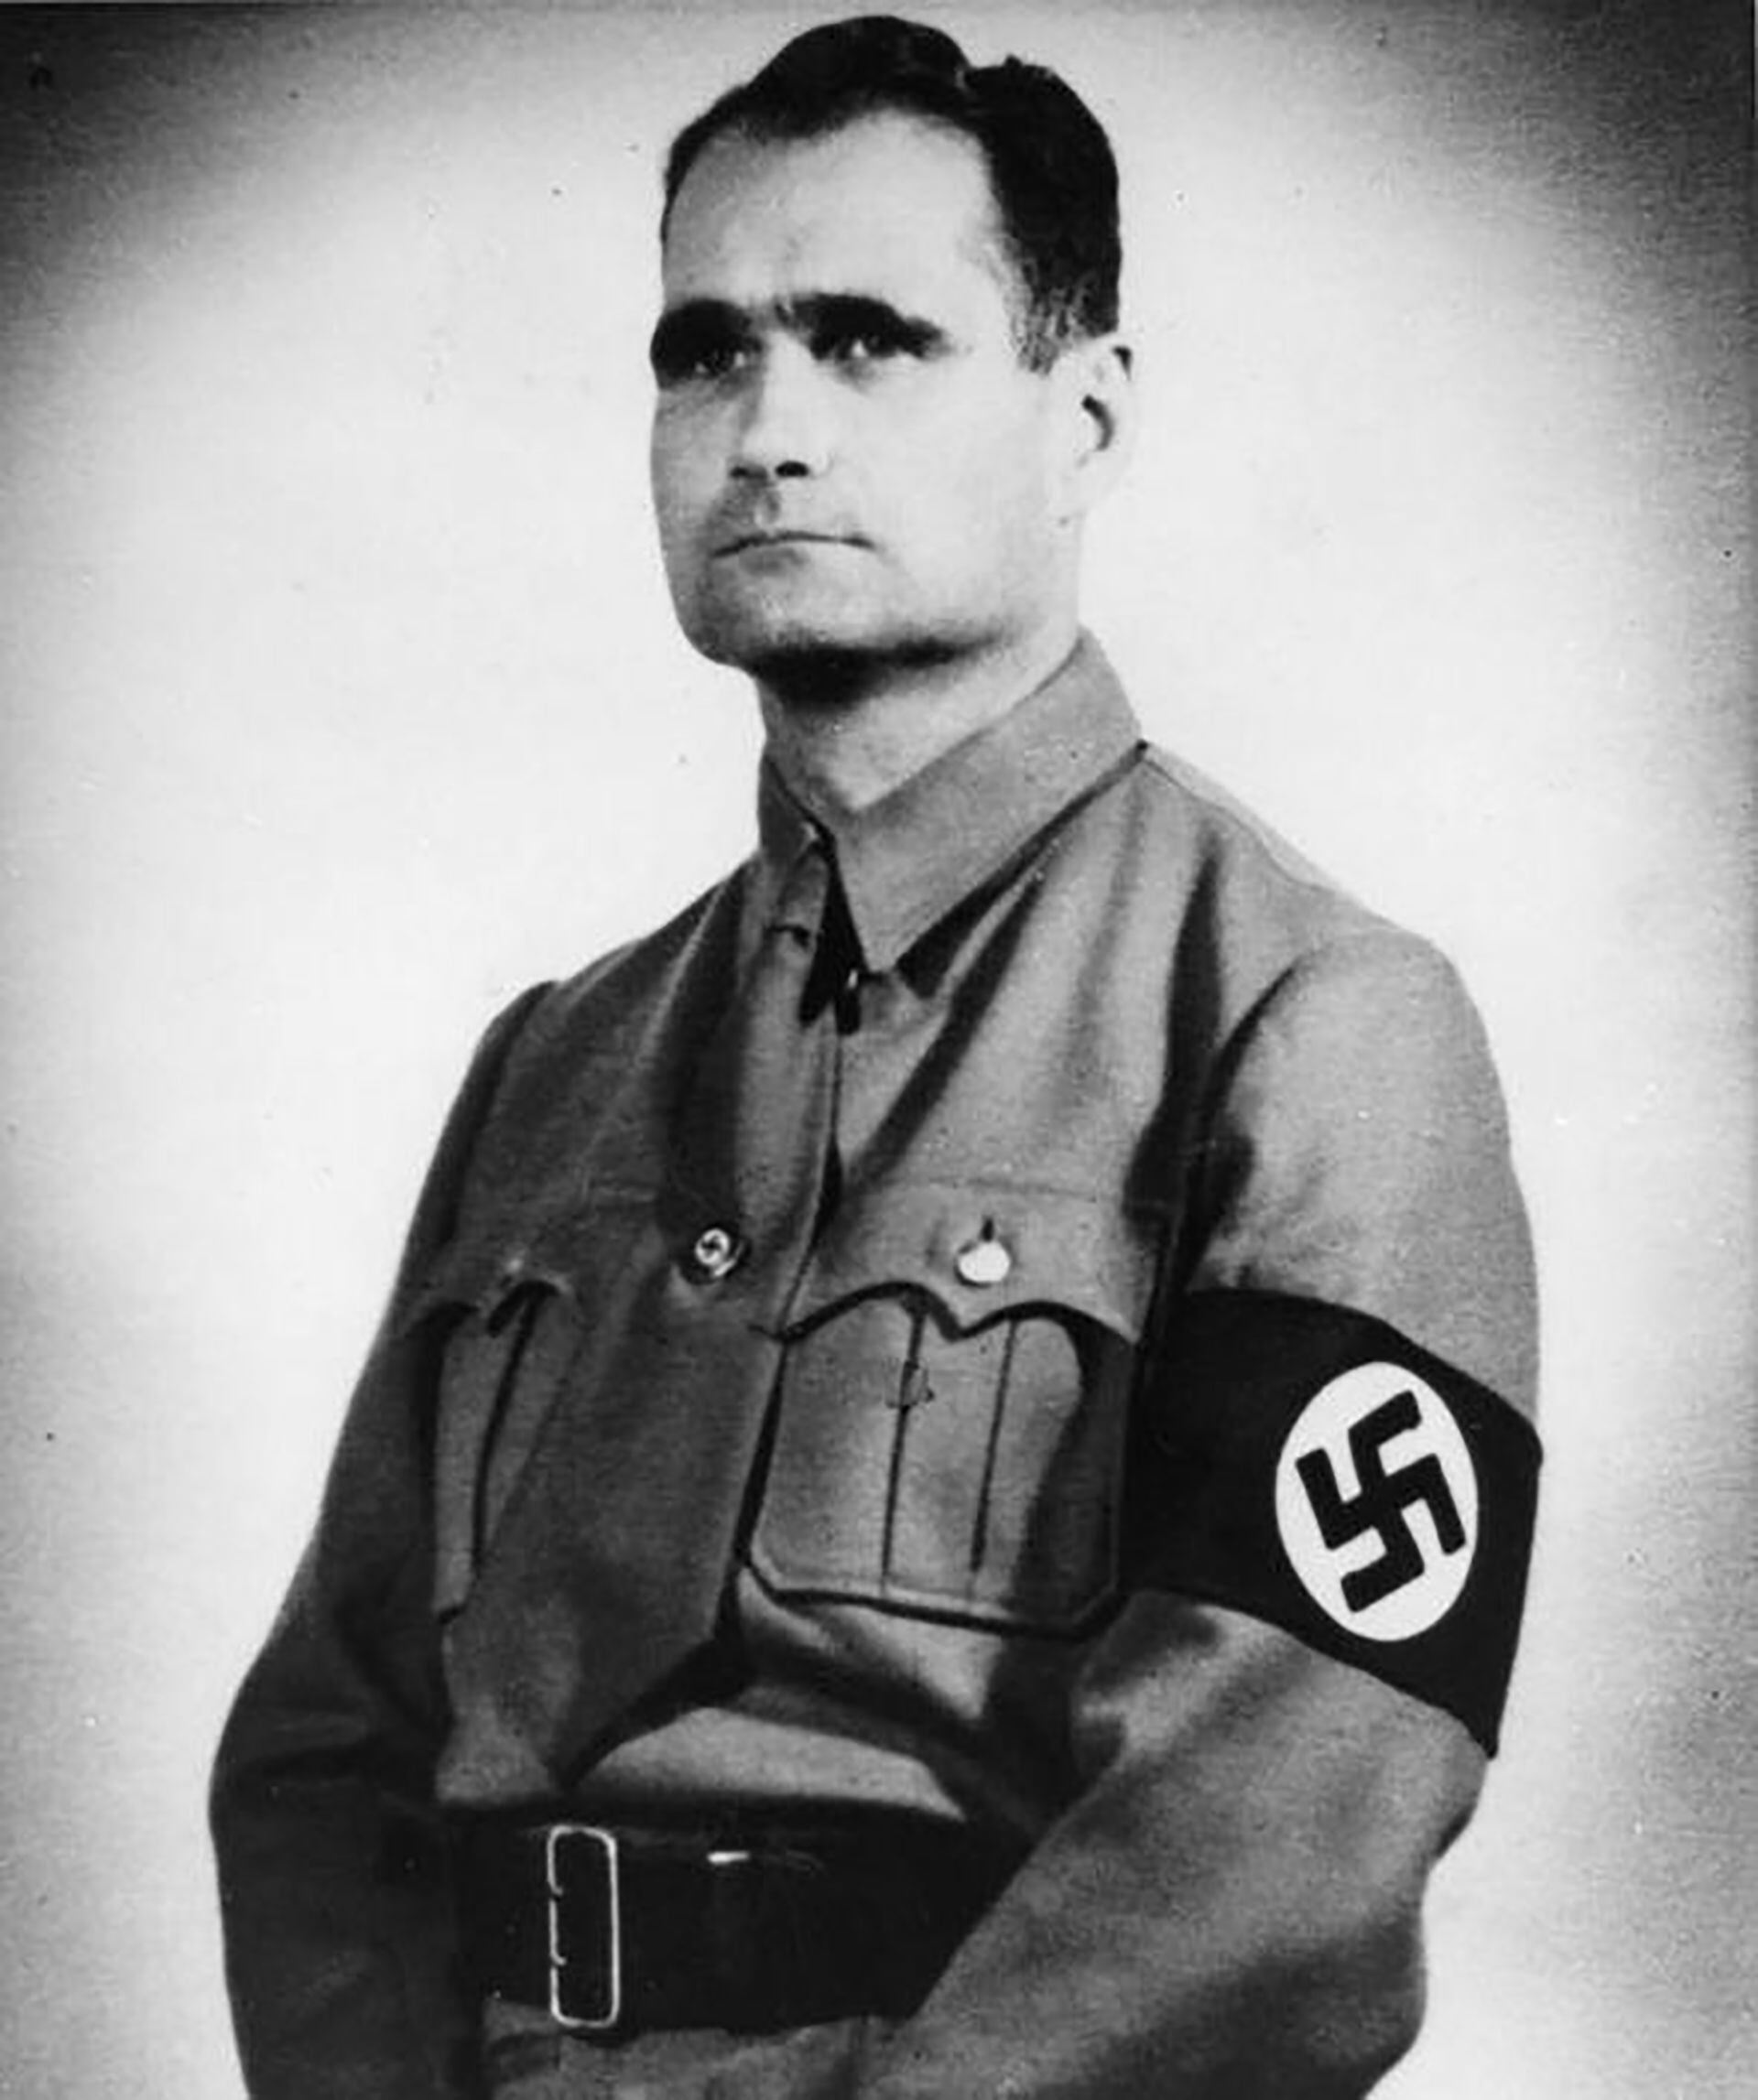 En 1923, participó junto a Hitler en el frustrado intento de golpe de estado que llevó a ambos a prisión. Allí ofició de amanuense de Hitler. Hess acompañó a Hitler en su ascenso al poder